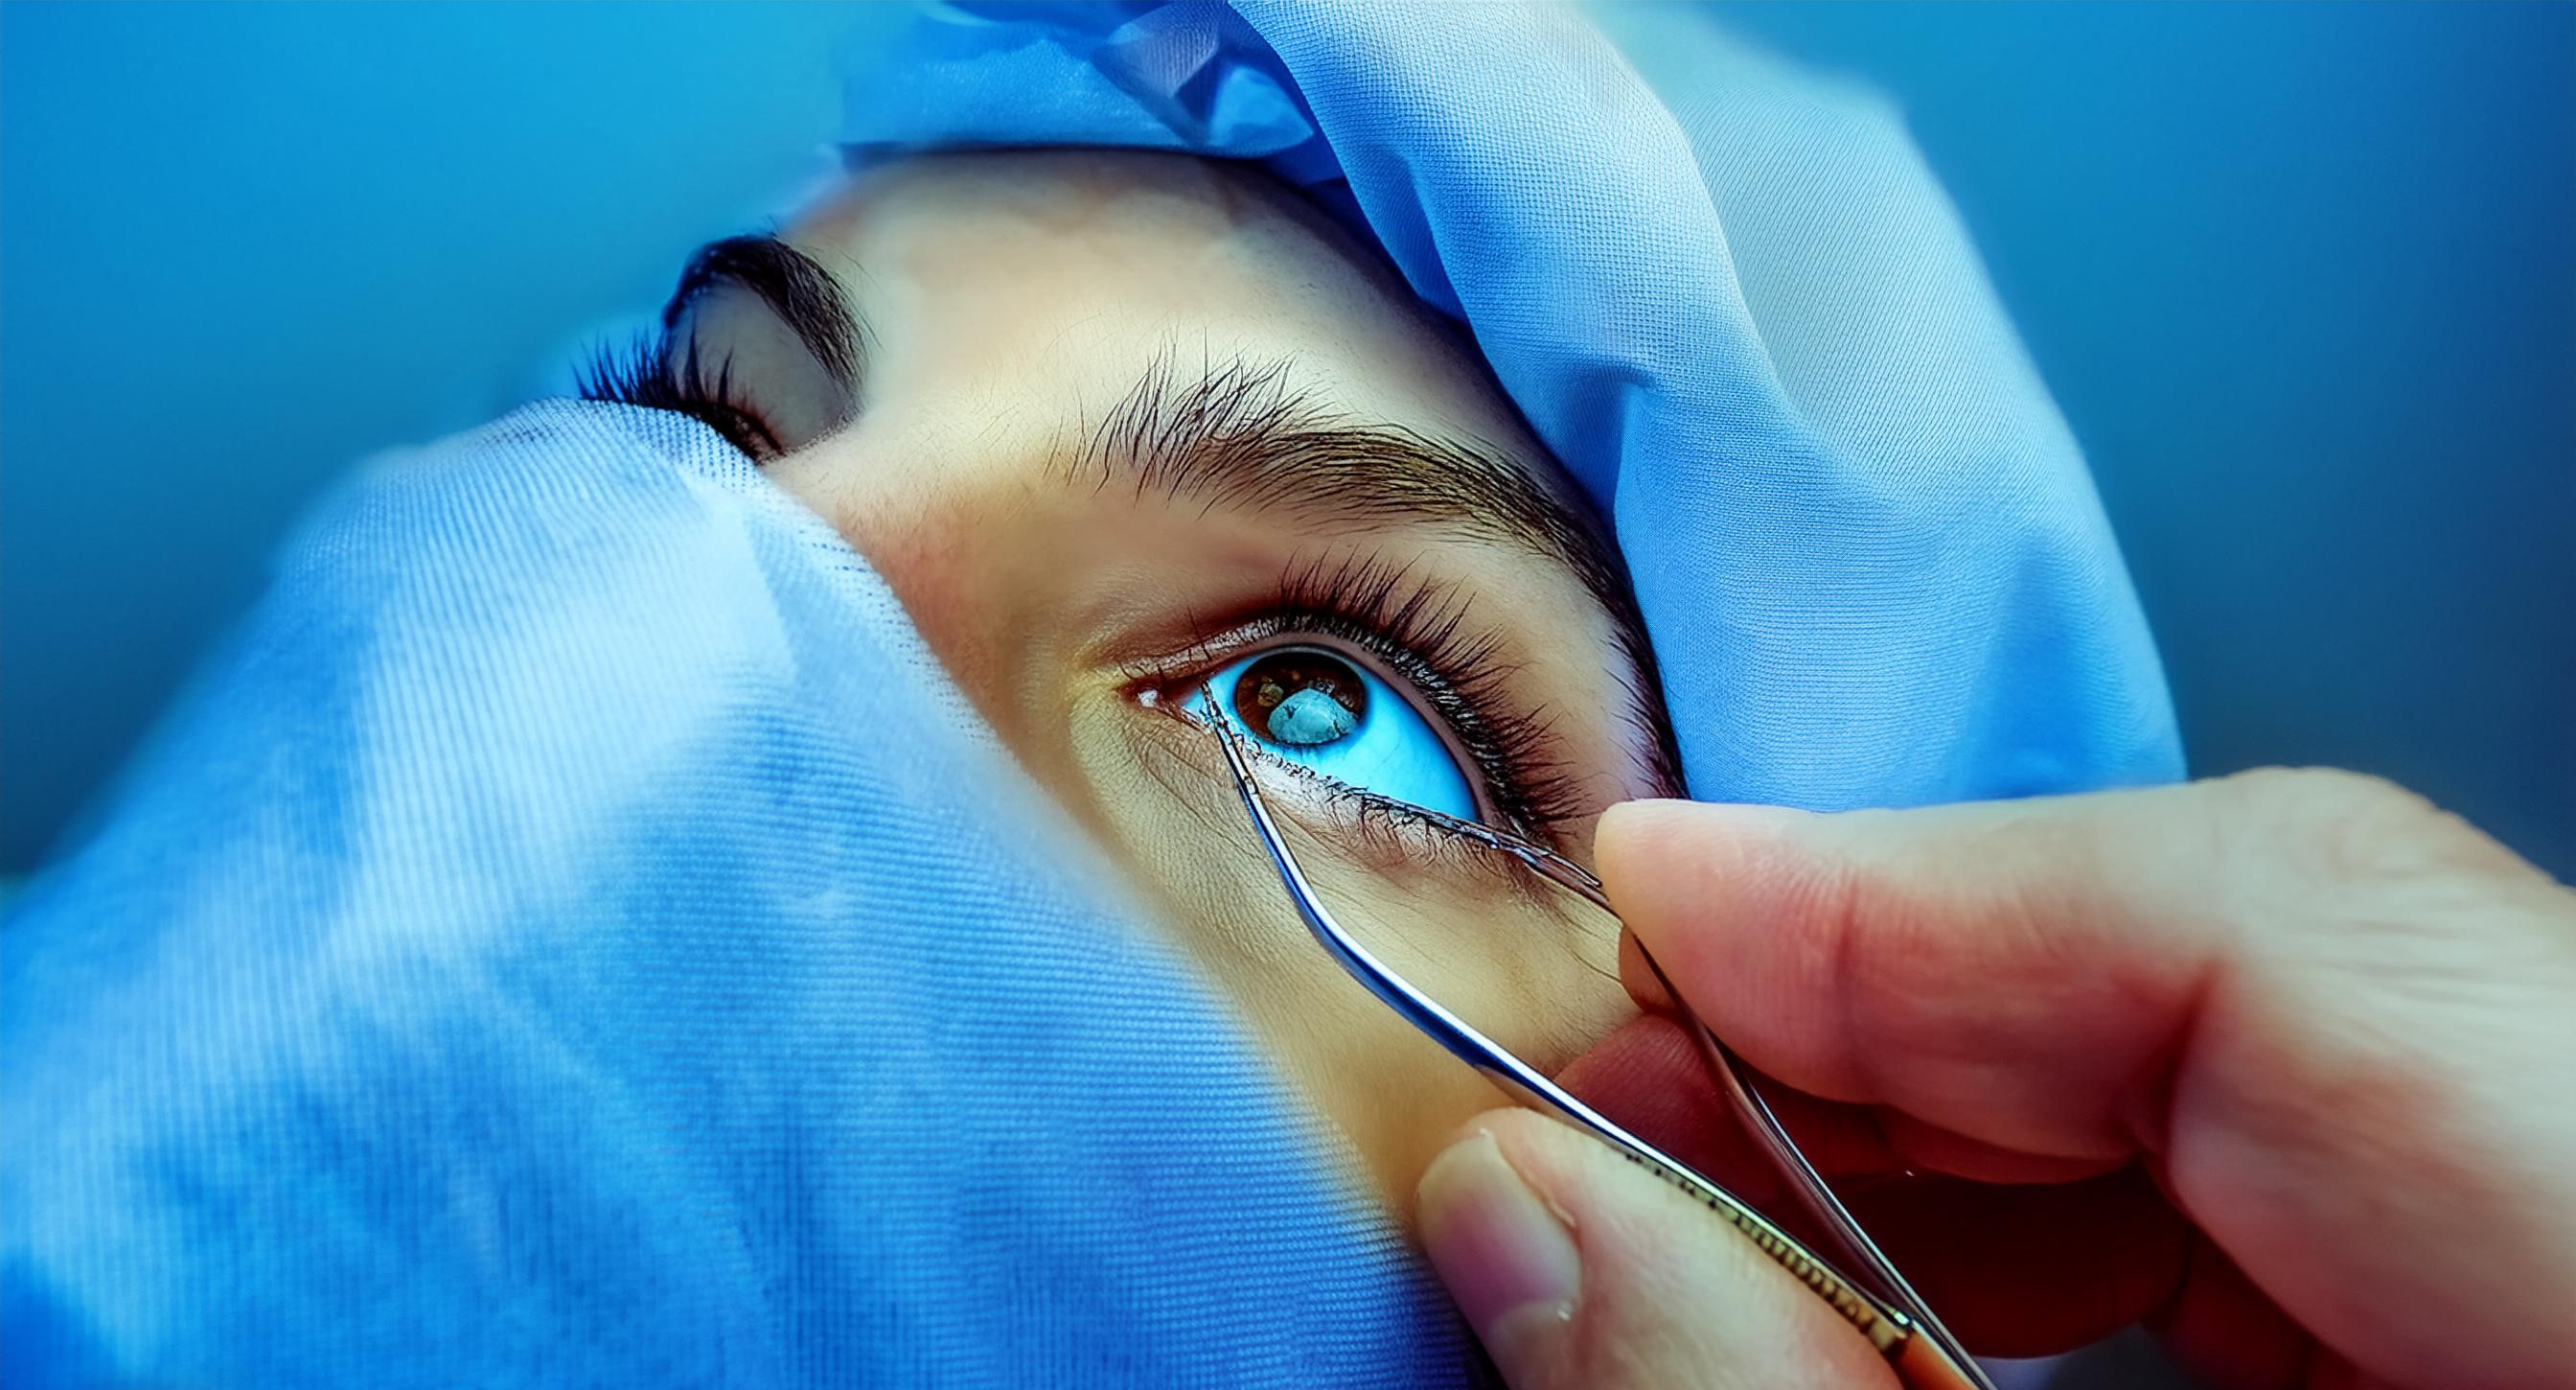 LASIK Eye Surgery